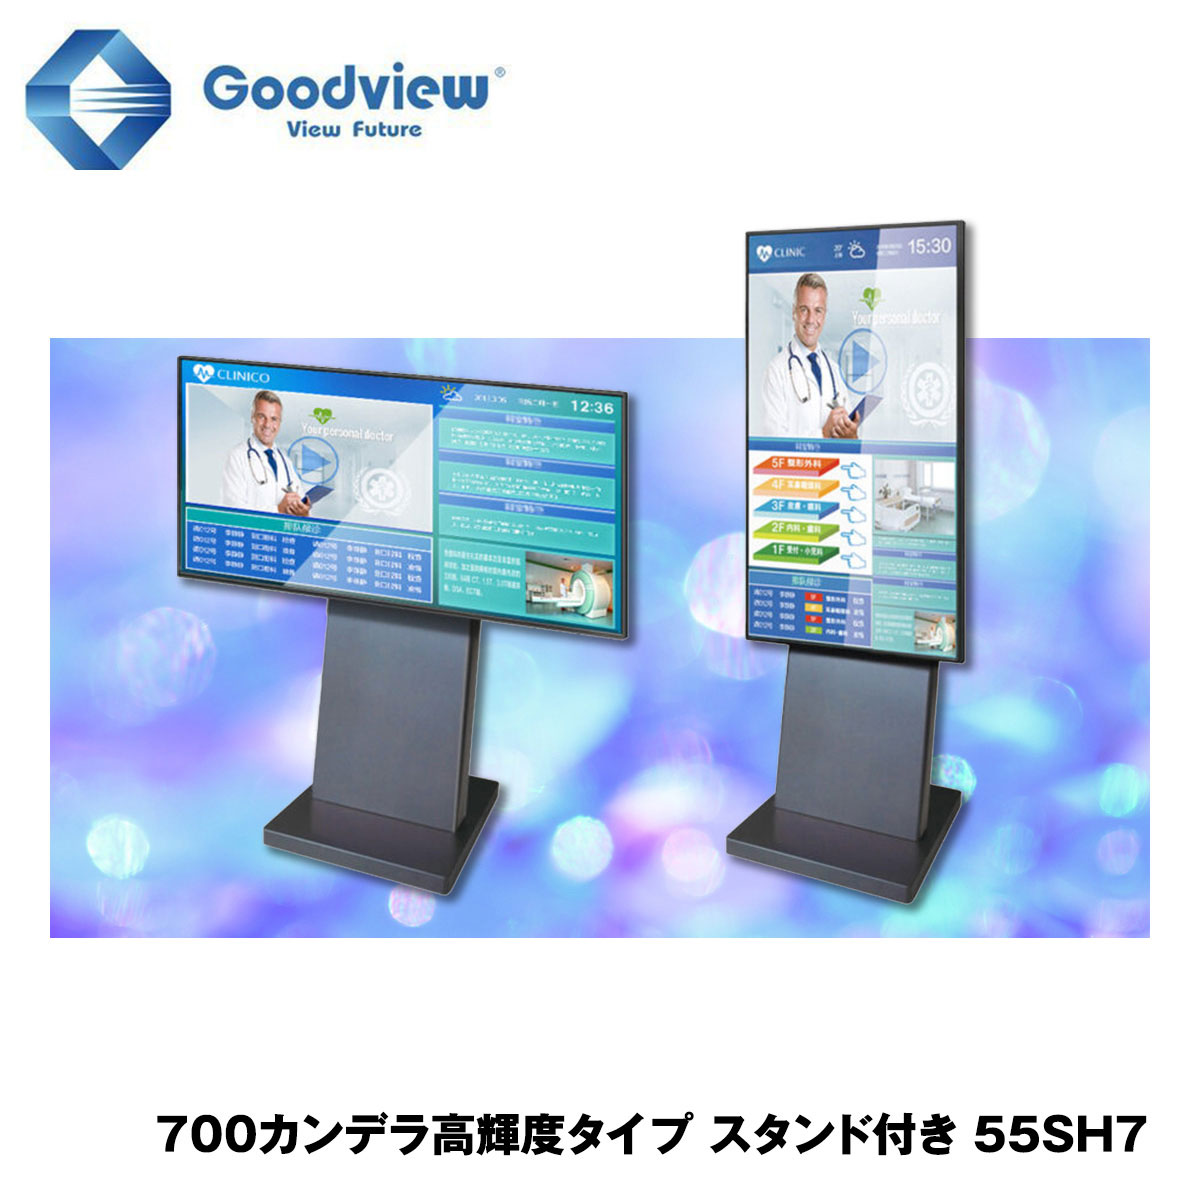 Goodview デジタルサイネージ 高輝度タイプ 自立式スタンドセット 700カンデラ 55型【55SH7】